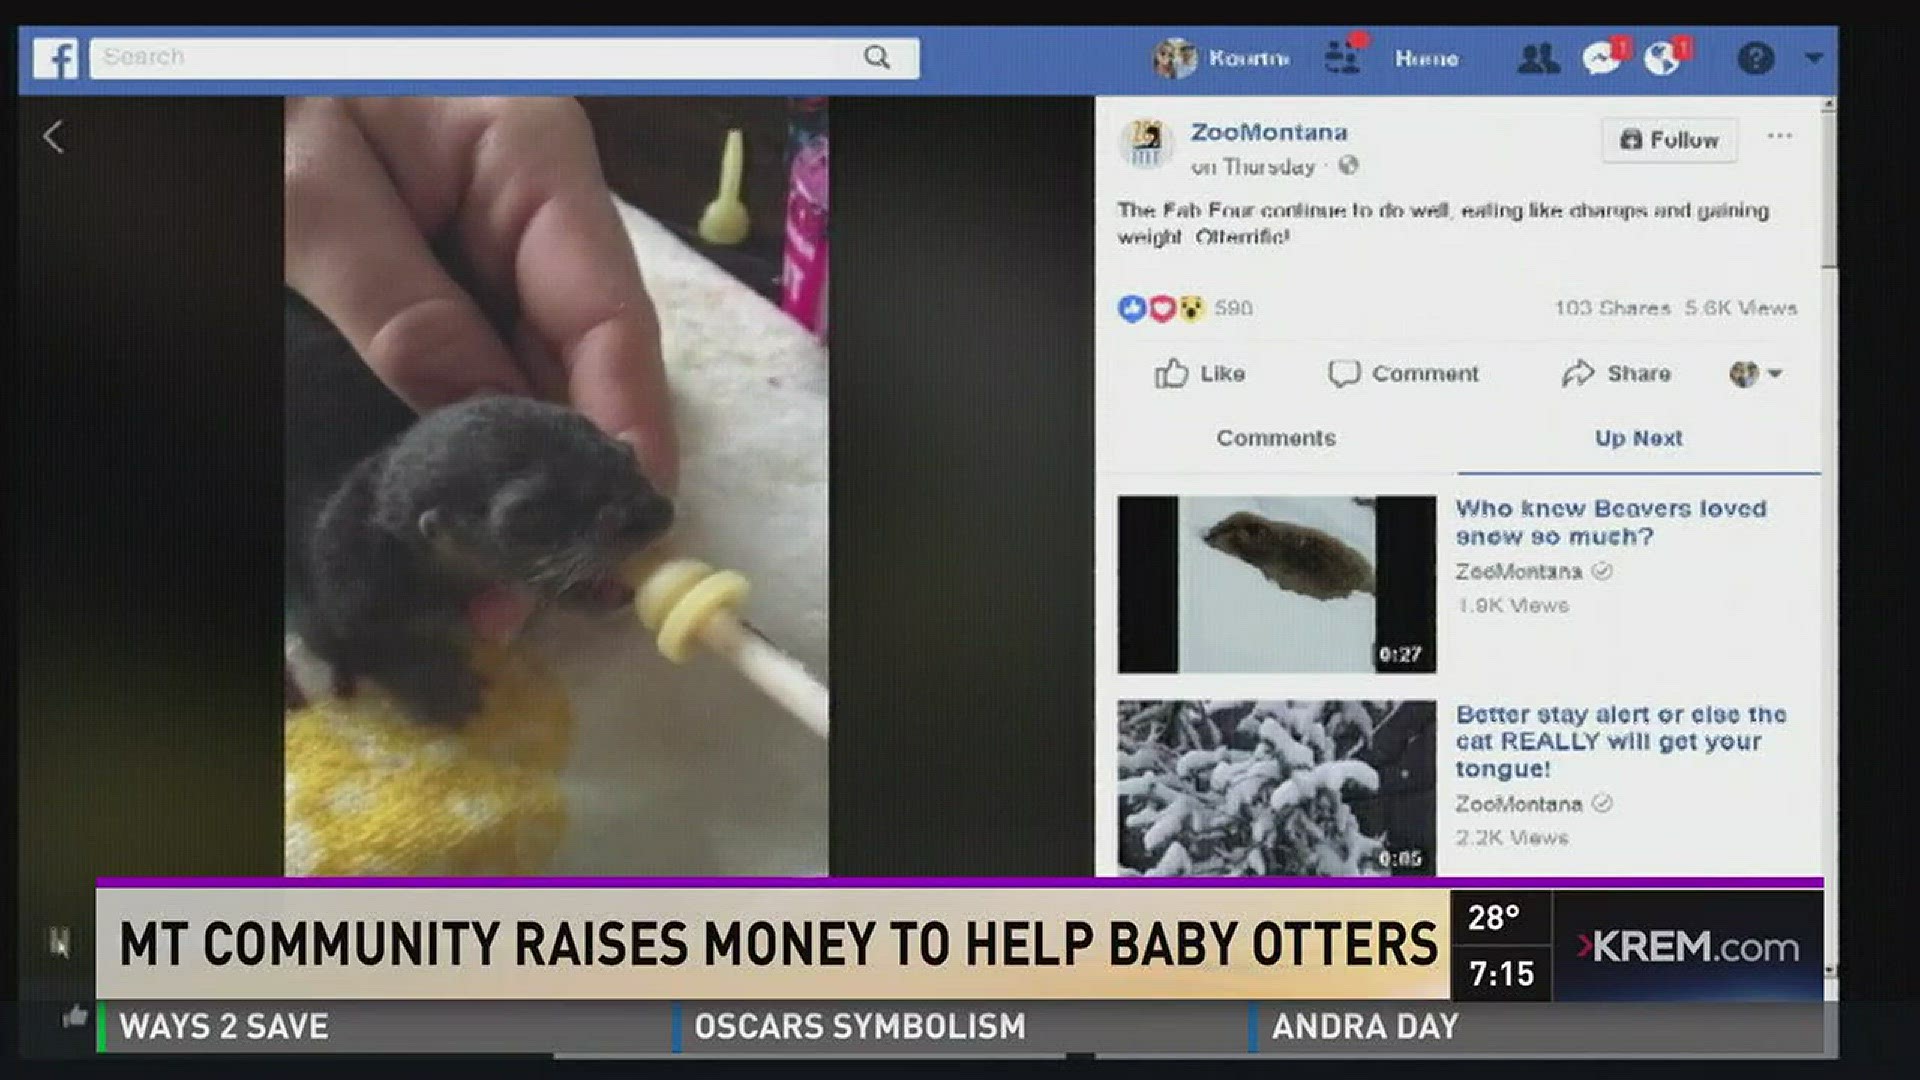 MT community raises money to help baby otters (3-5-18)